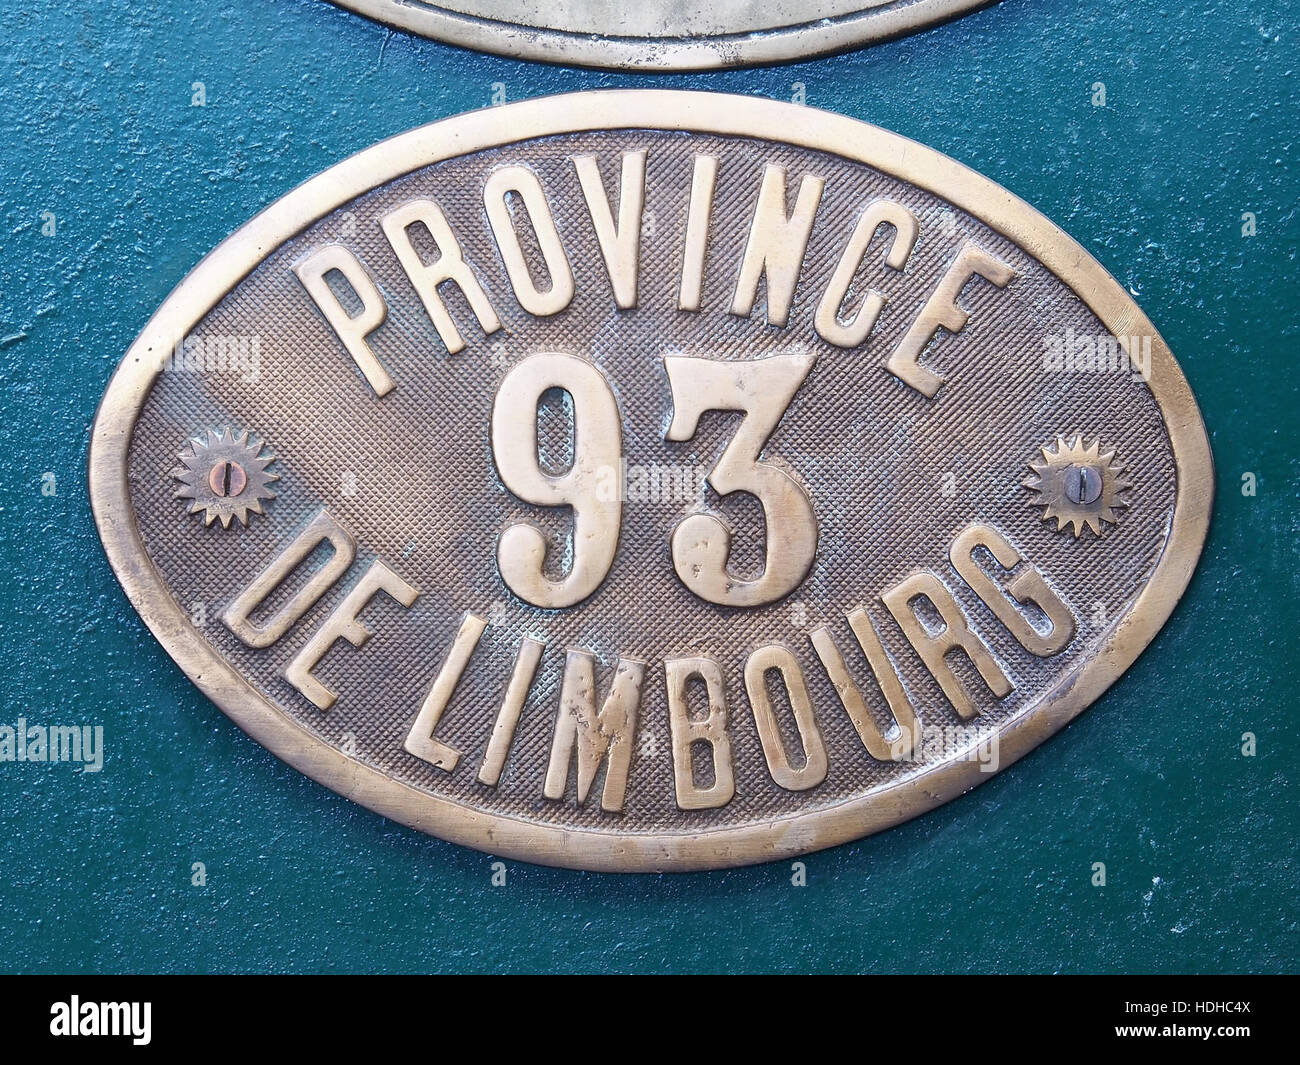 SociA9 Anonyme de St Leonard, Liege No1363 1904, 93 Province de Limbourg pic2 Stock Photo